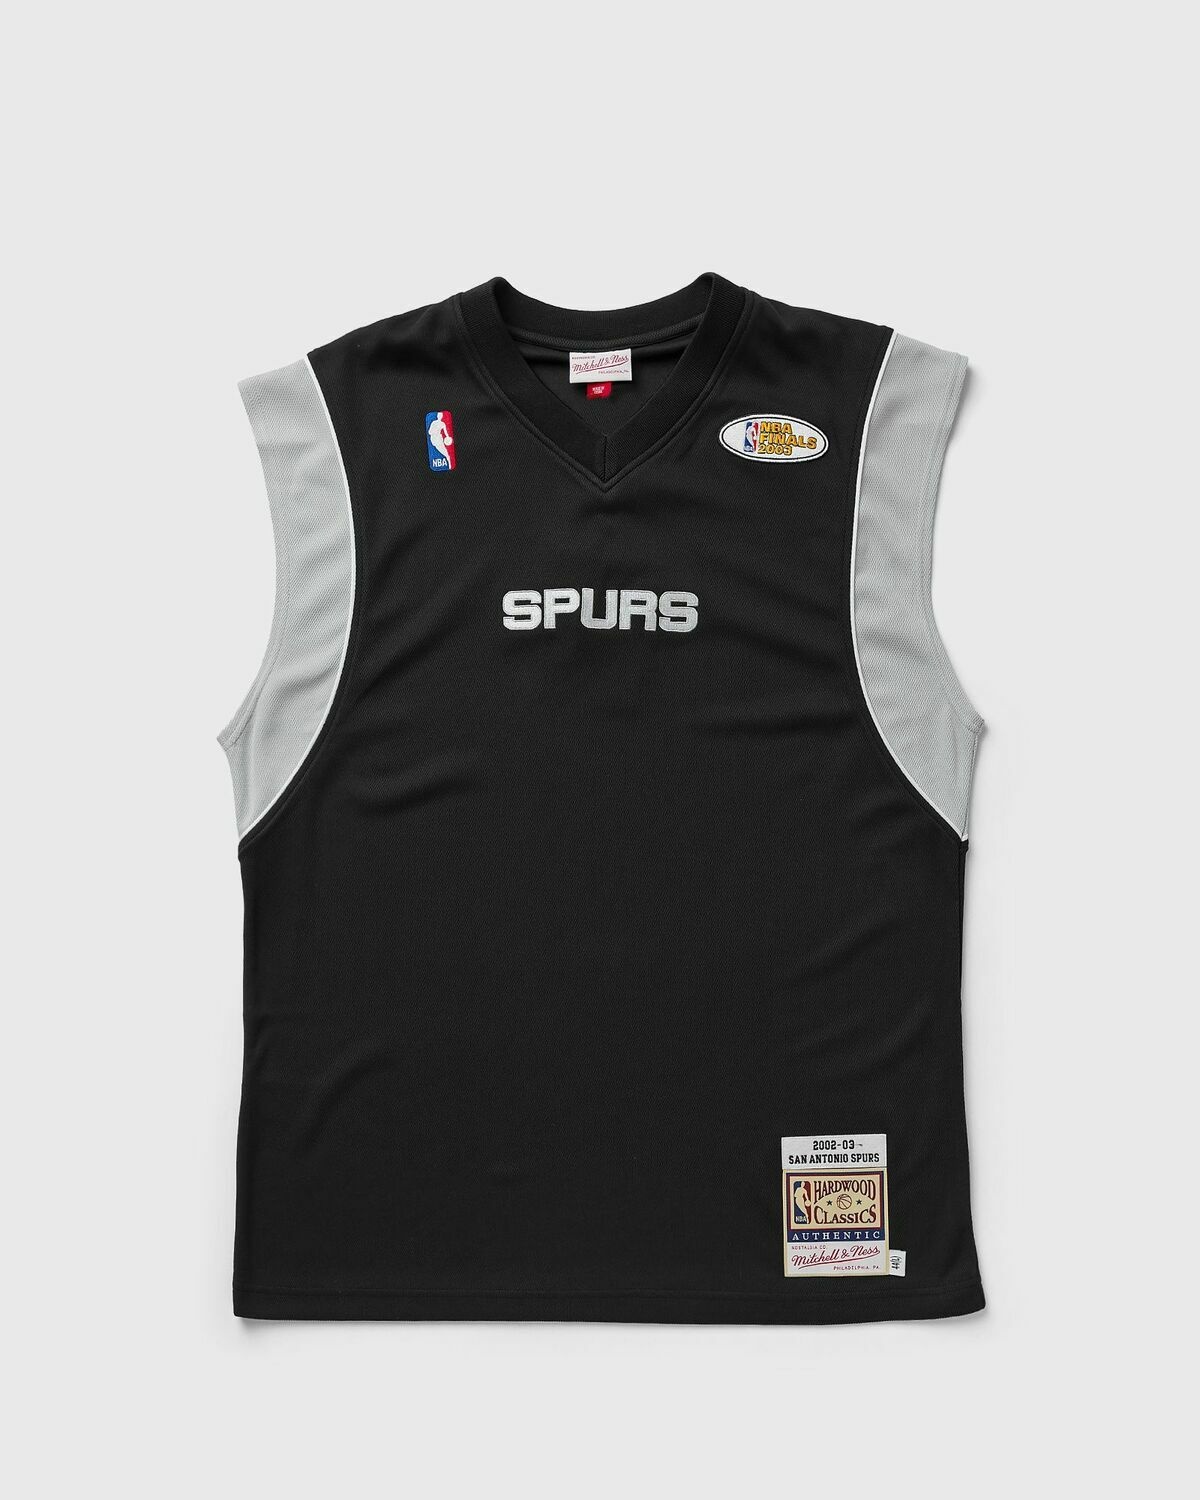 Mitchell & Ness Nba Authentic Shooting Shirt San Antonio Spurs 2002 03 Black - Mens - Jerseys